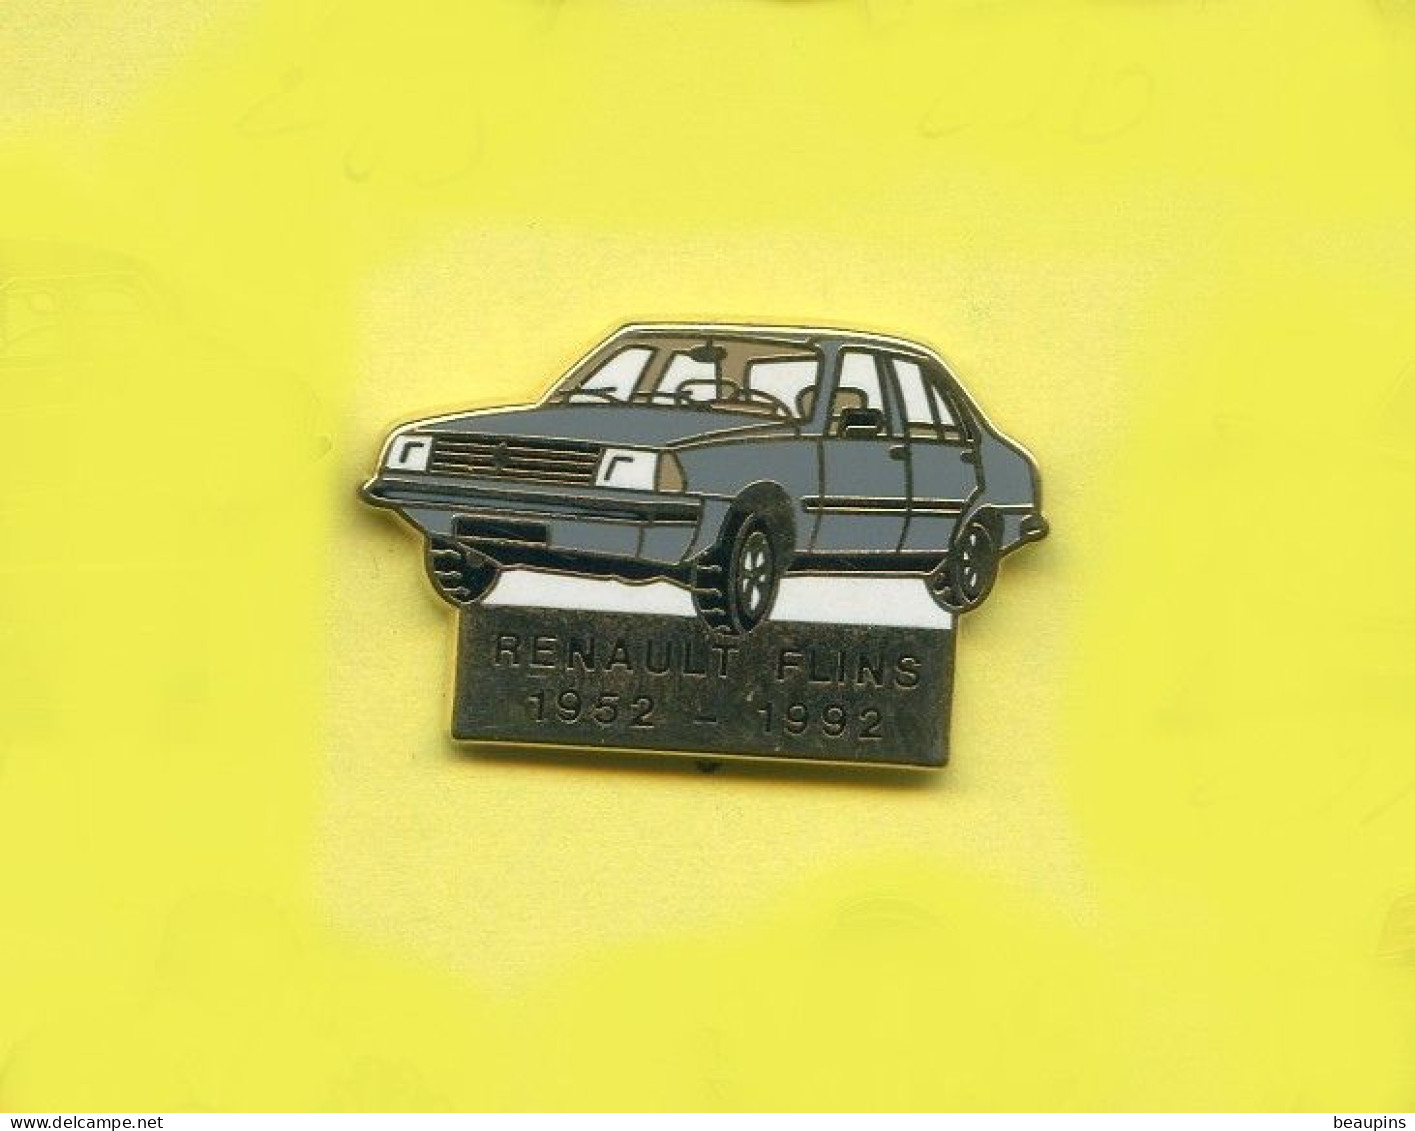 Rare Pins Auto Voiture Renault Flins 1952 - 1992 Zamac Fr296 - Renault